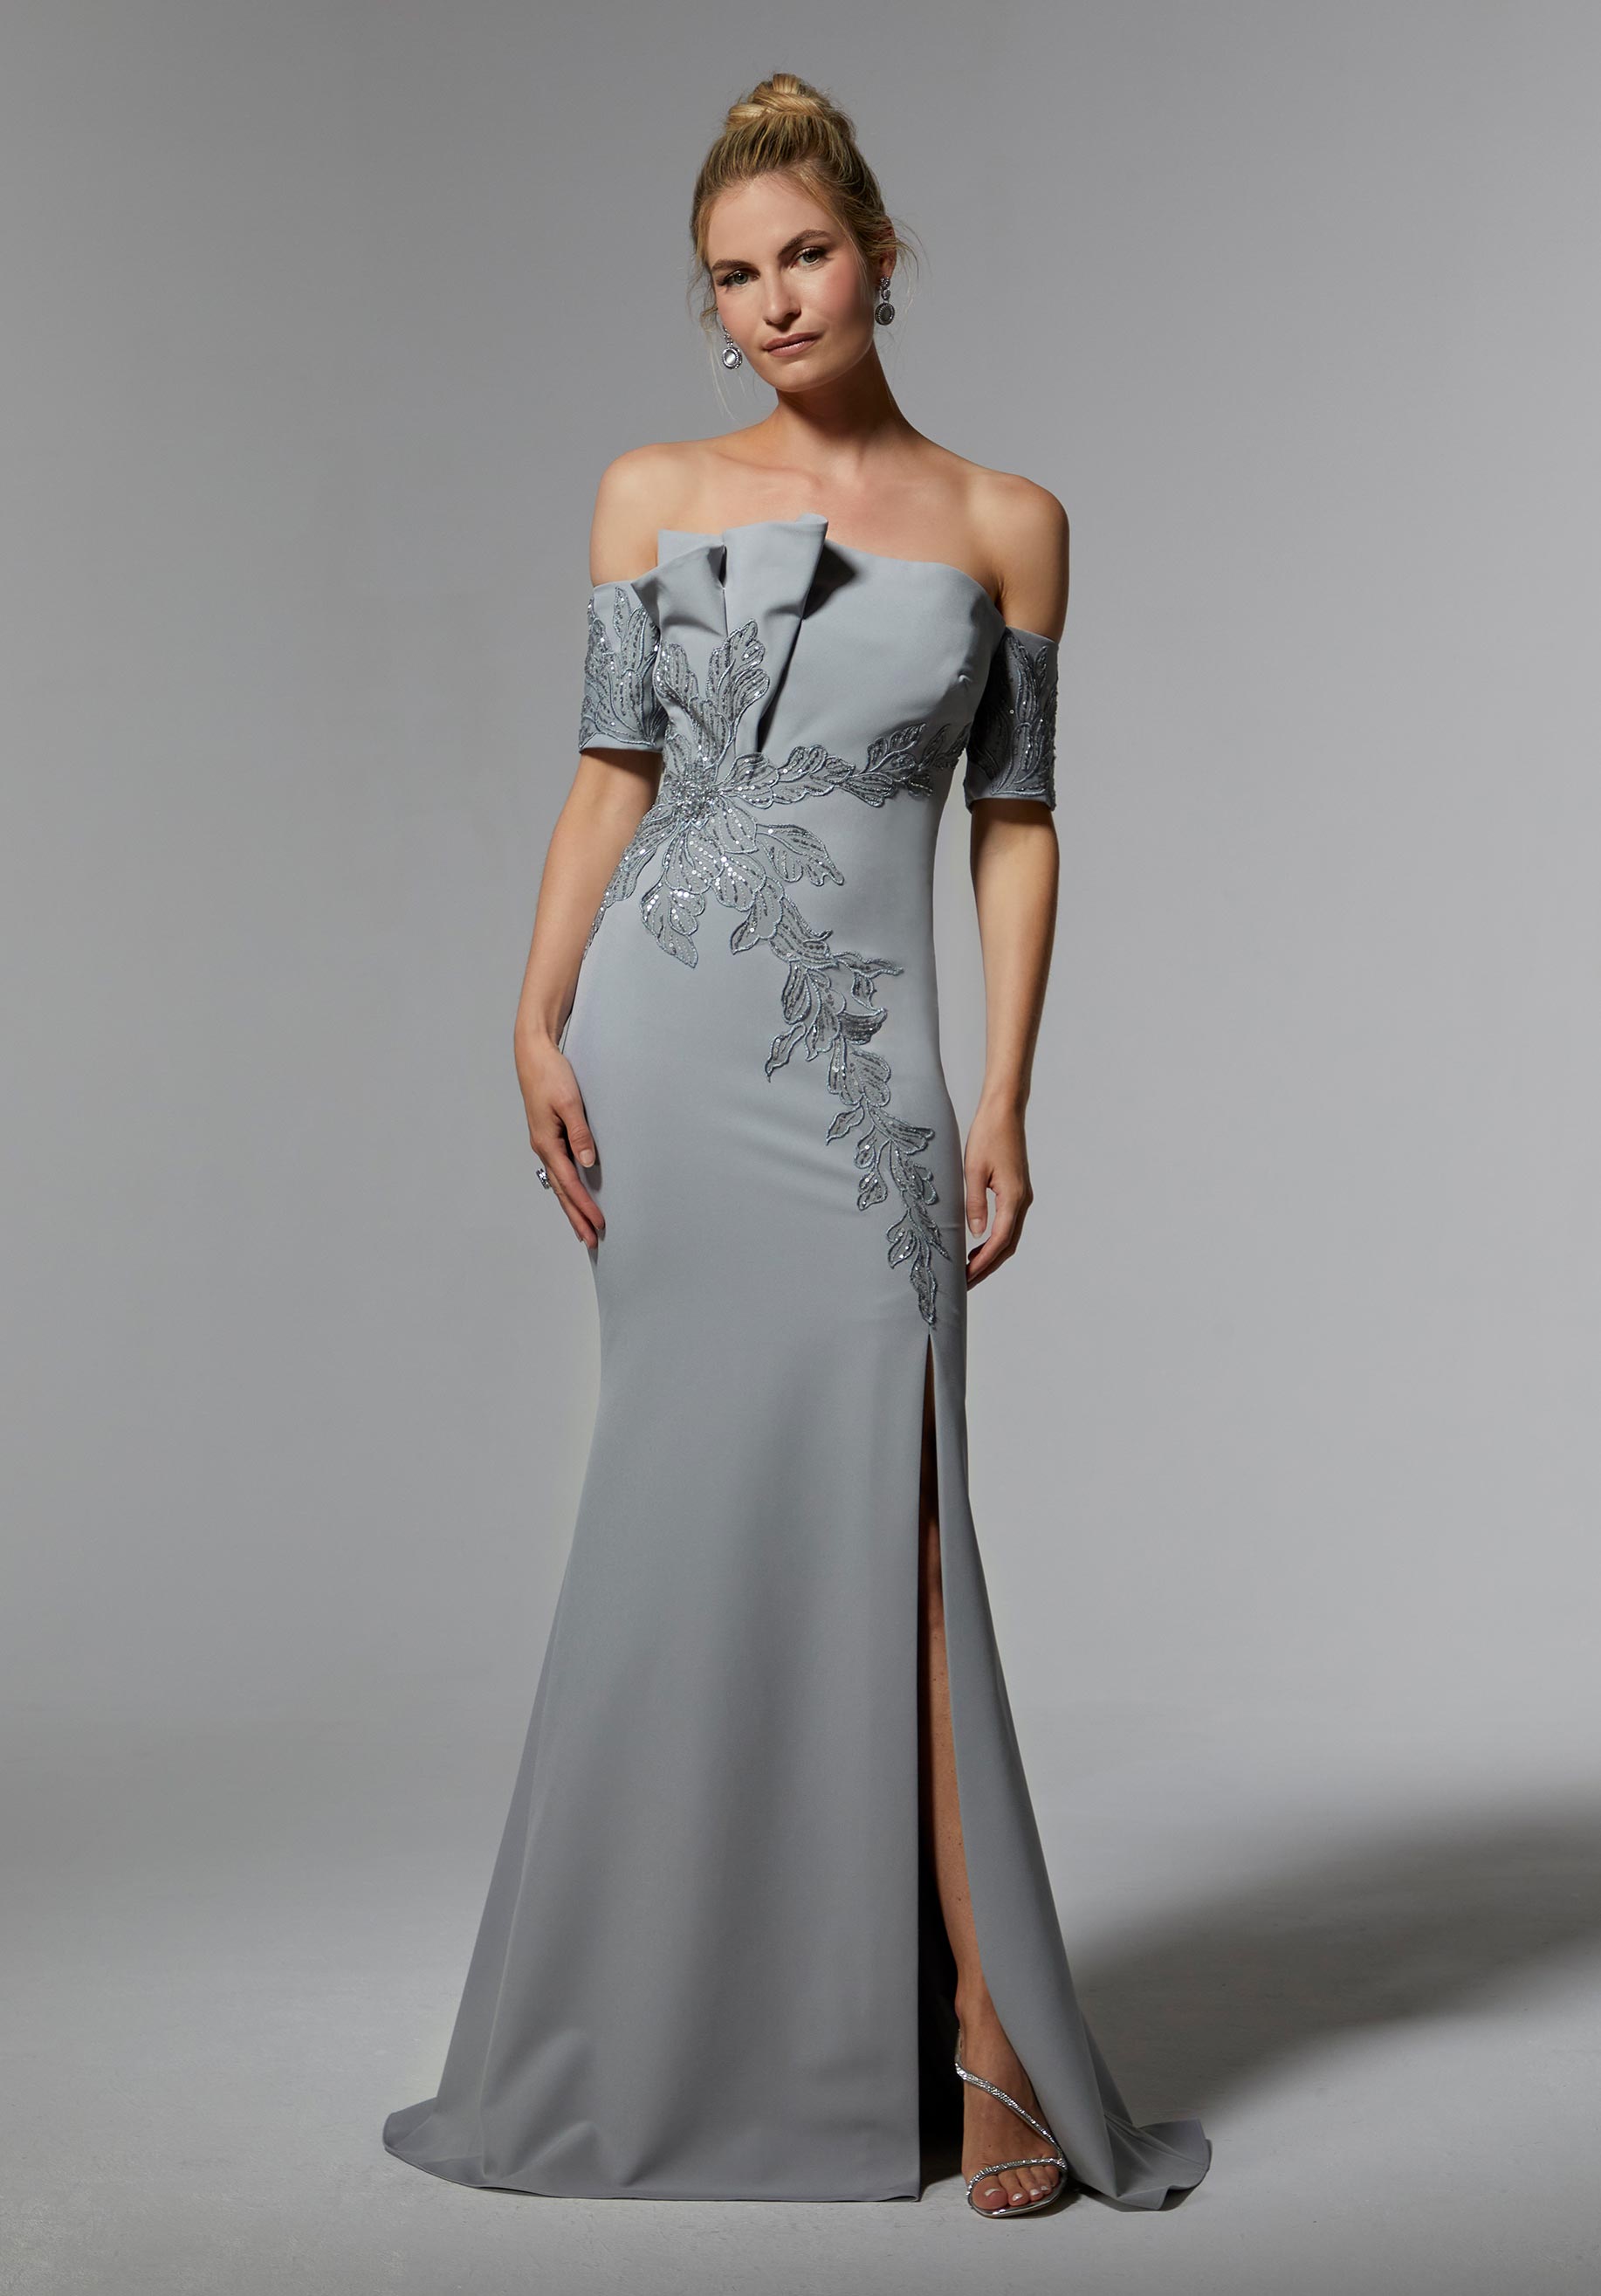 MGNY - 72919 - Cheron's Bridal, Mother/Party Dress